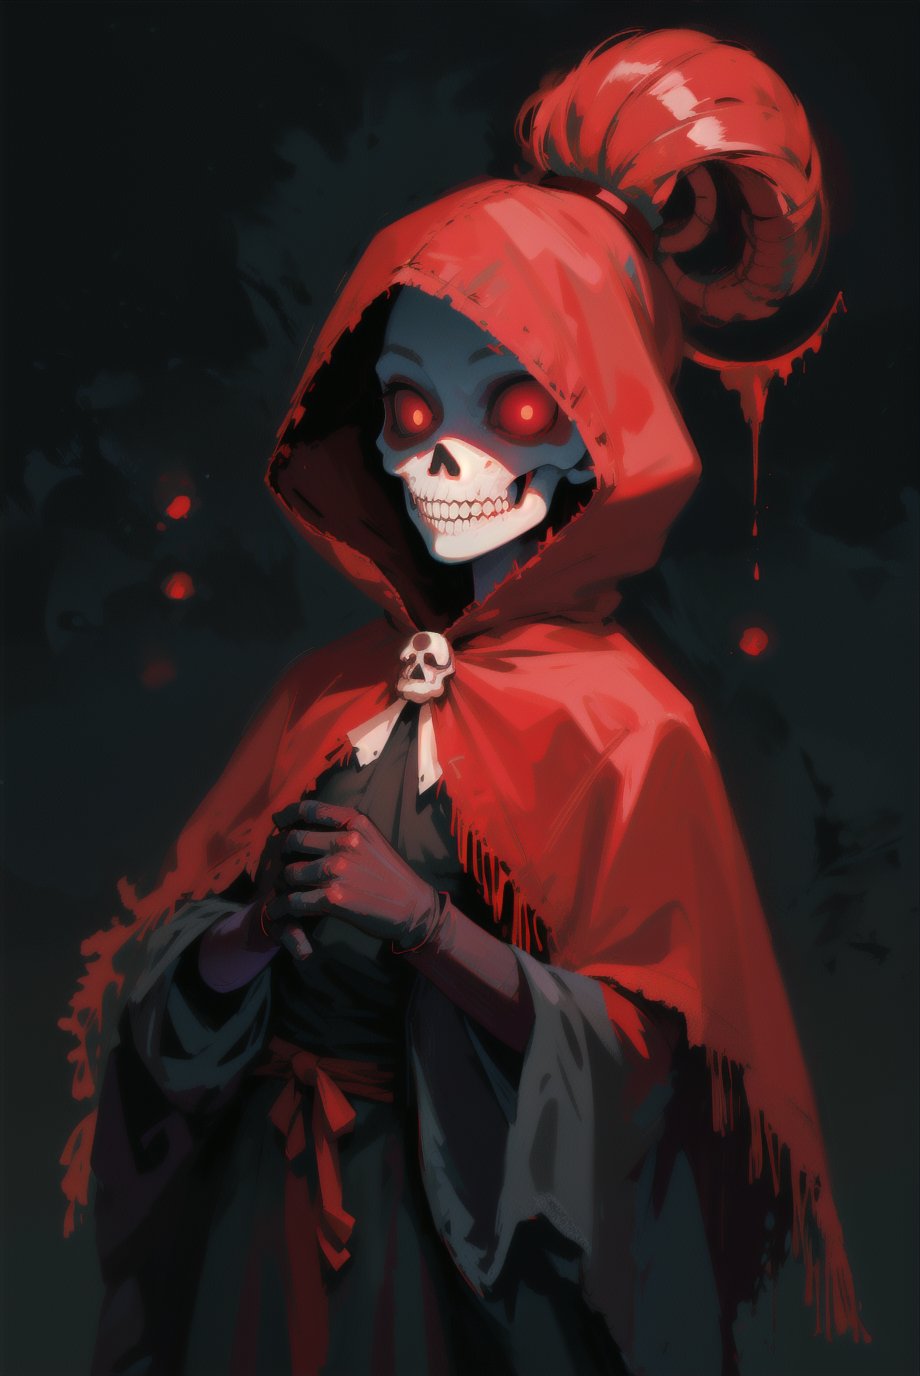 (dark magic, grimdark, creepy tale:1.15), skull, 20 yo woman, red clothes, red hood, colorful, dark background